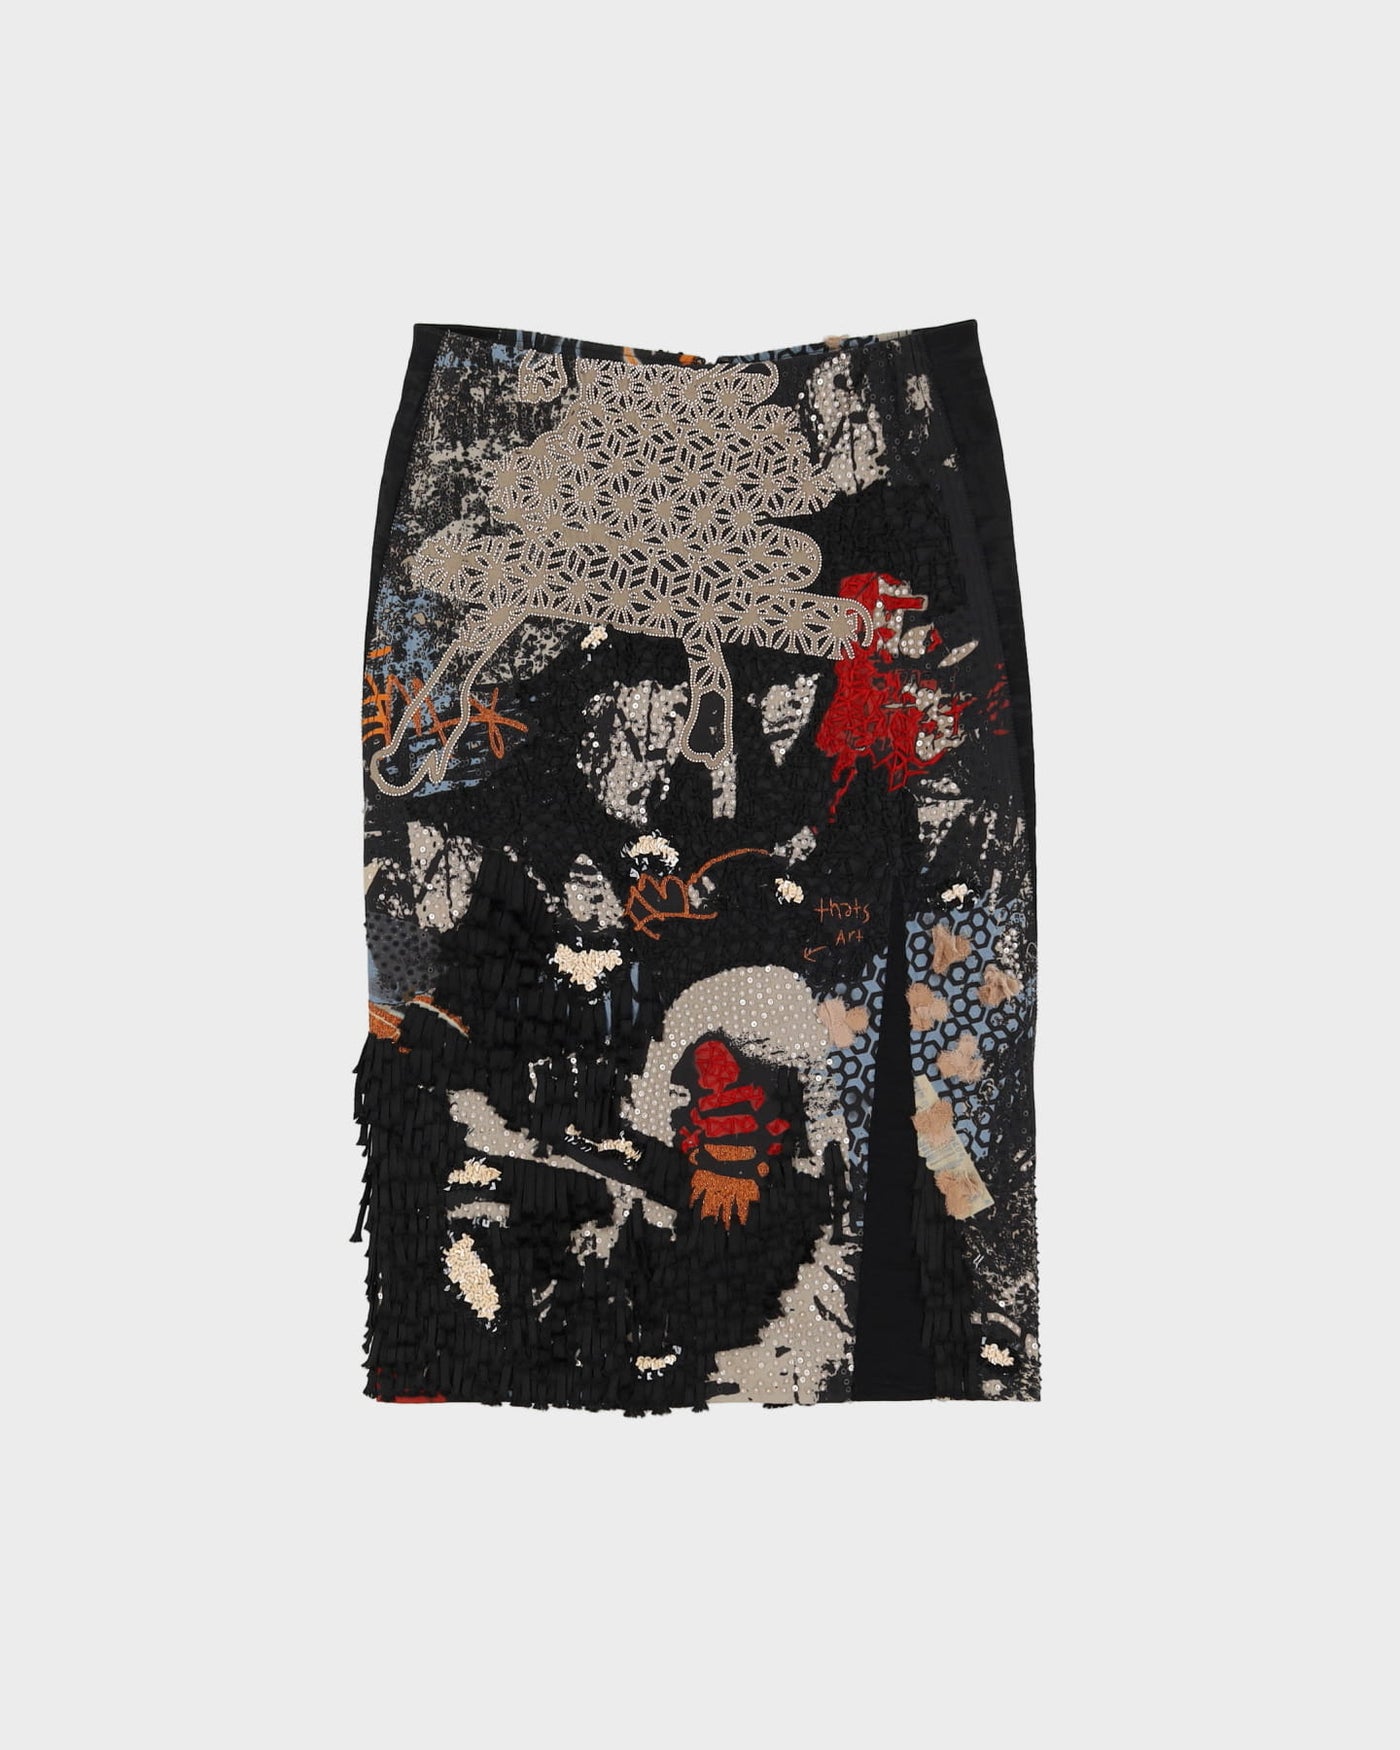 DKNY Black Patterned Beaded Fringed Pencil Skirt - S